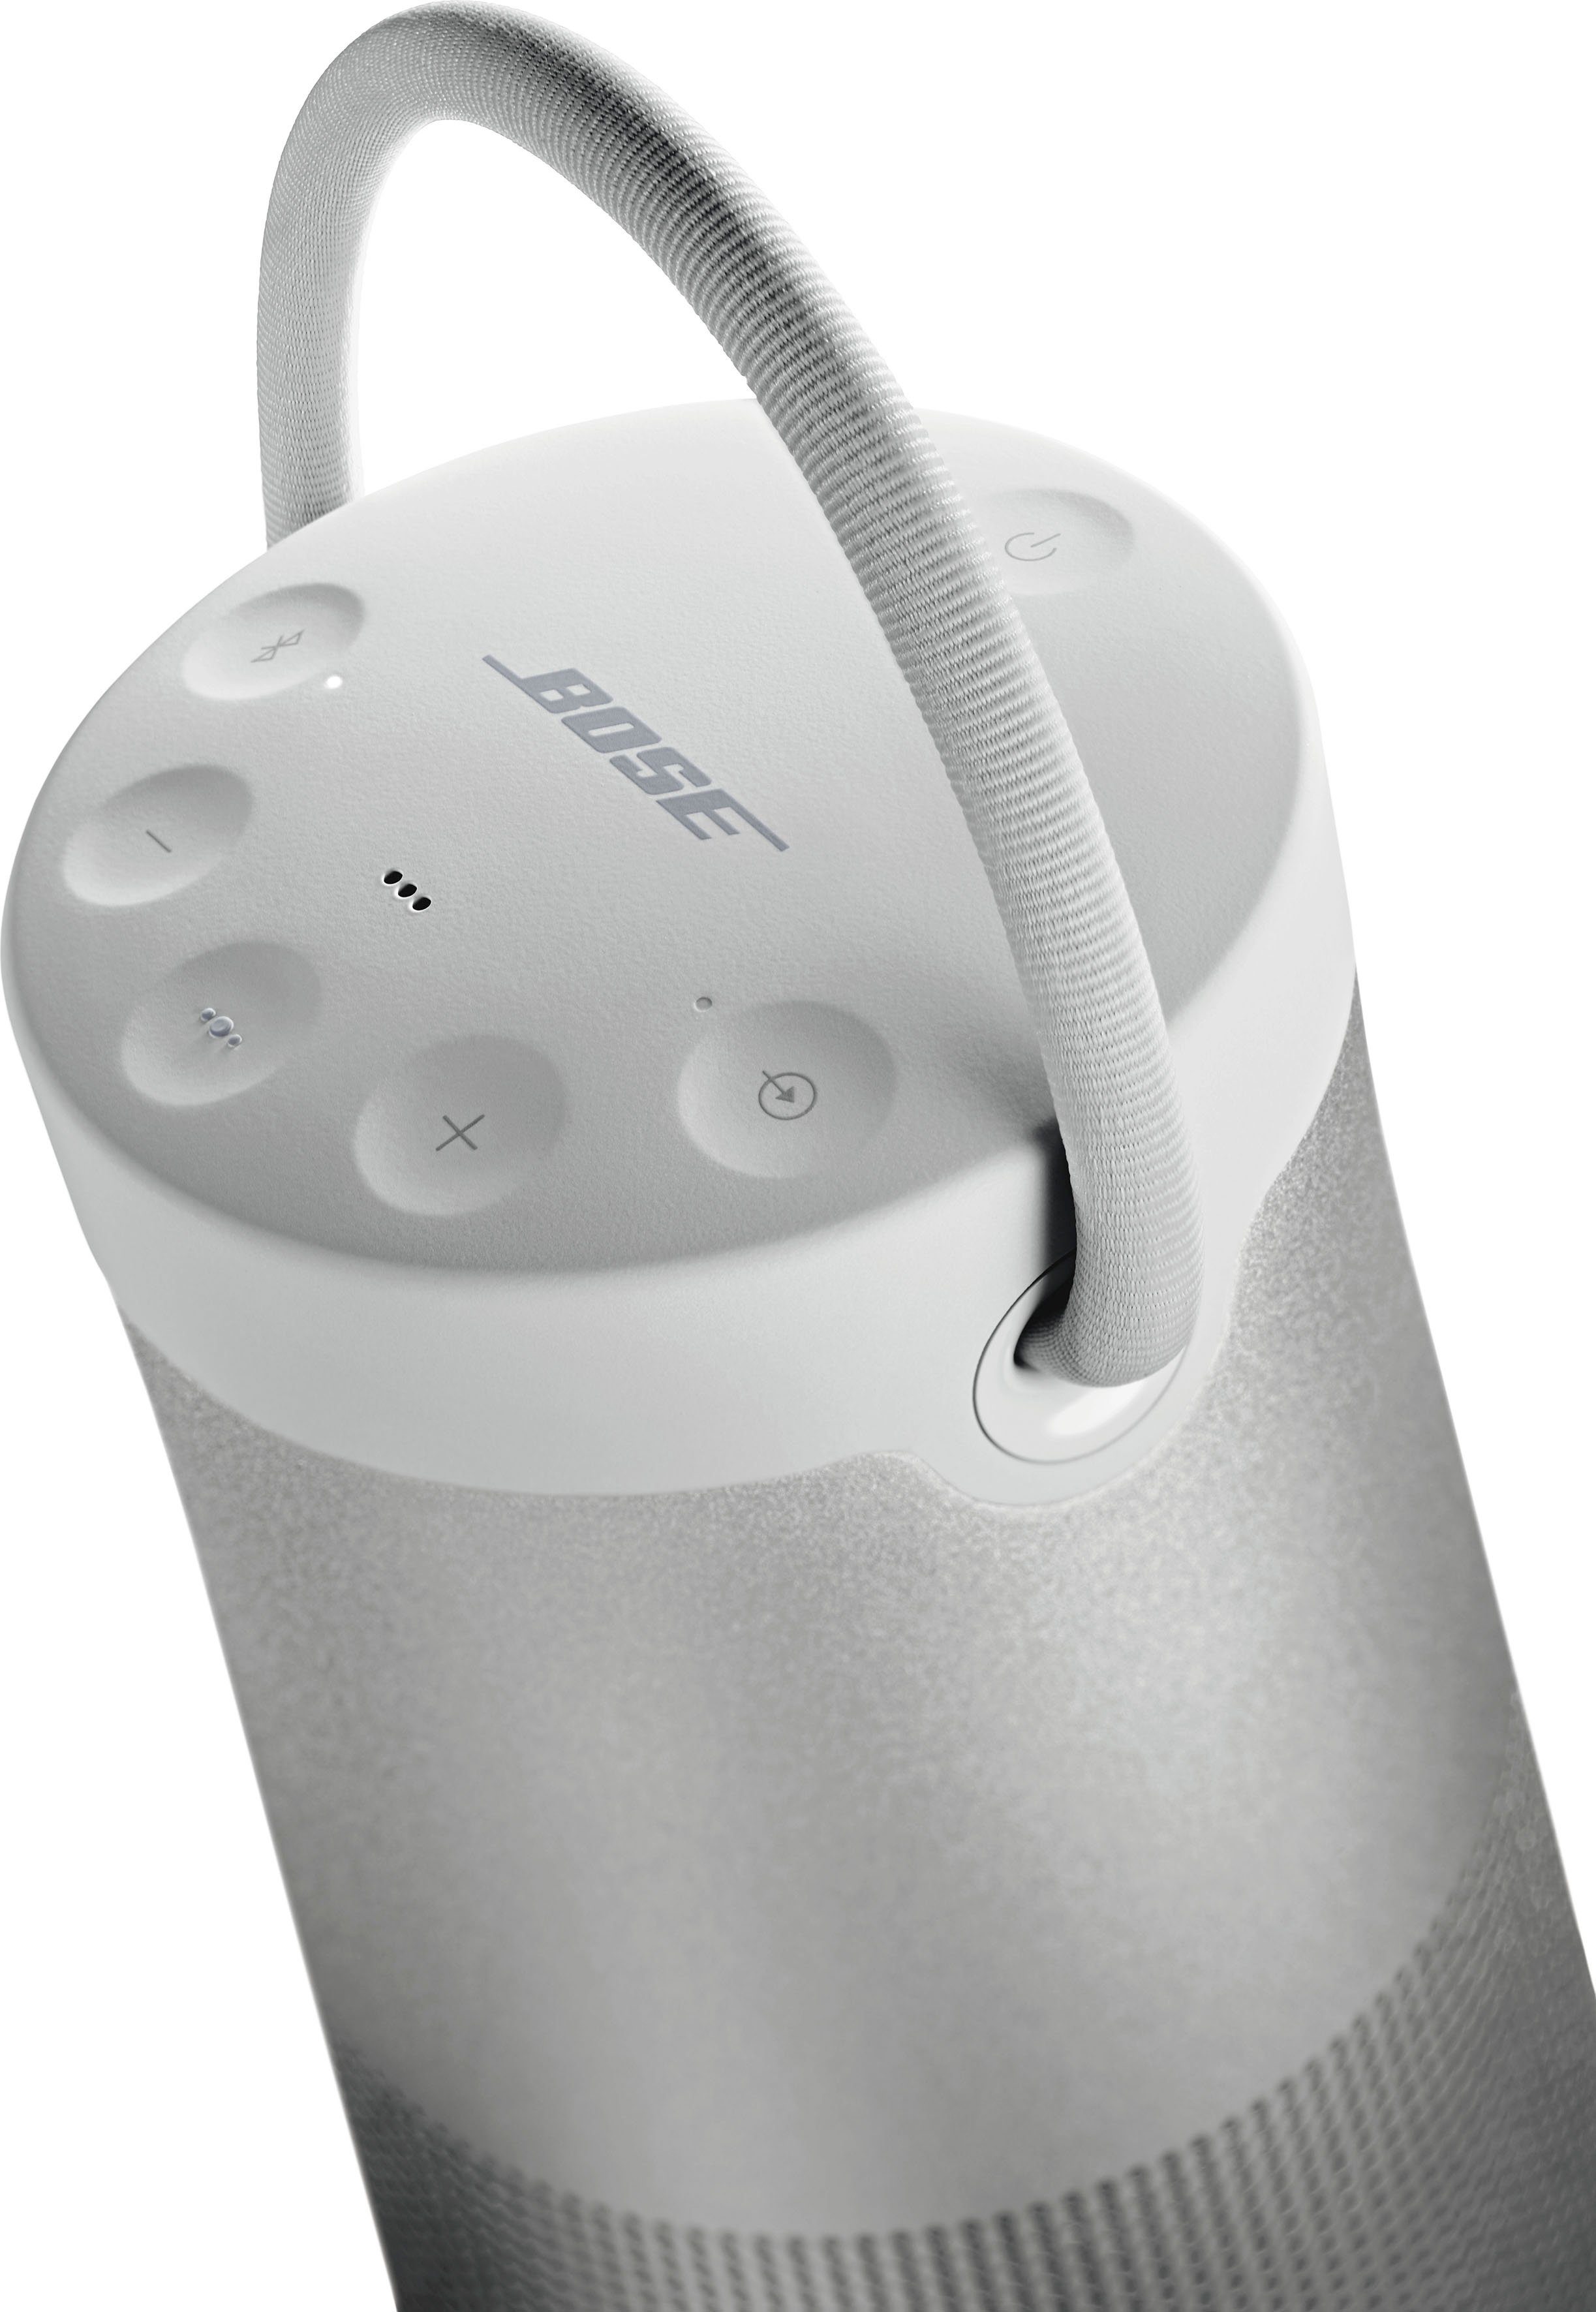 SoundLink Stereo (Bluetooth) Revolve+ II Luxe Silver Bluetooth-Lautsprecher Bose